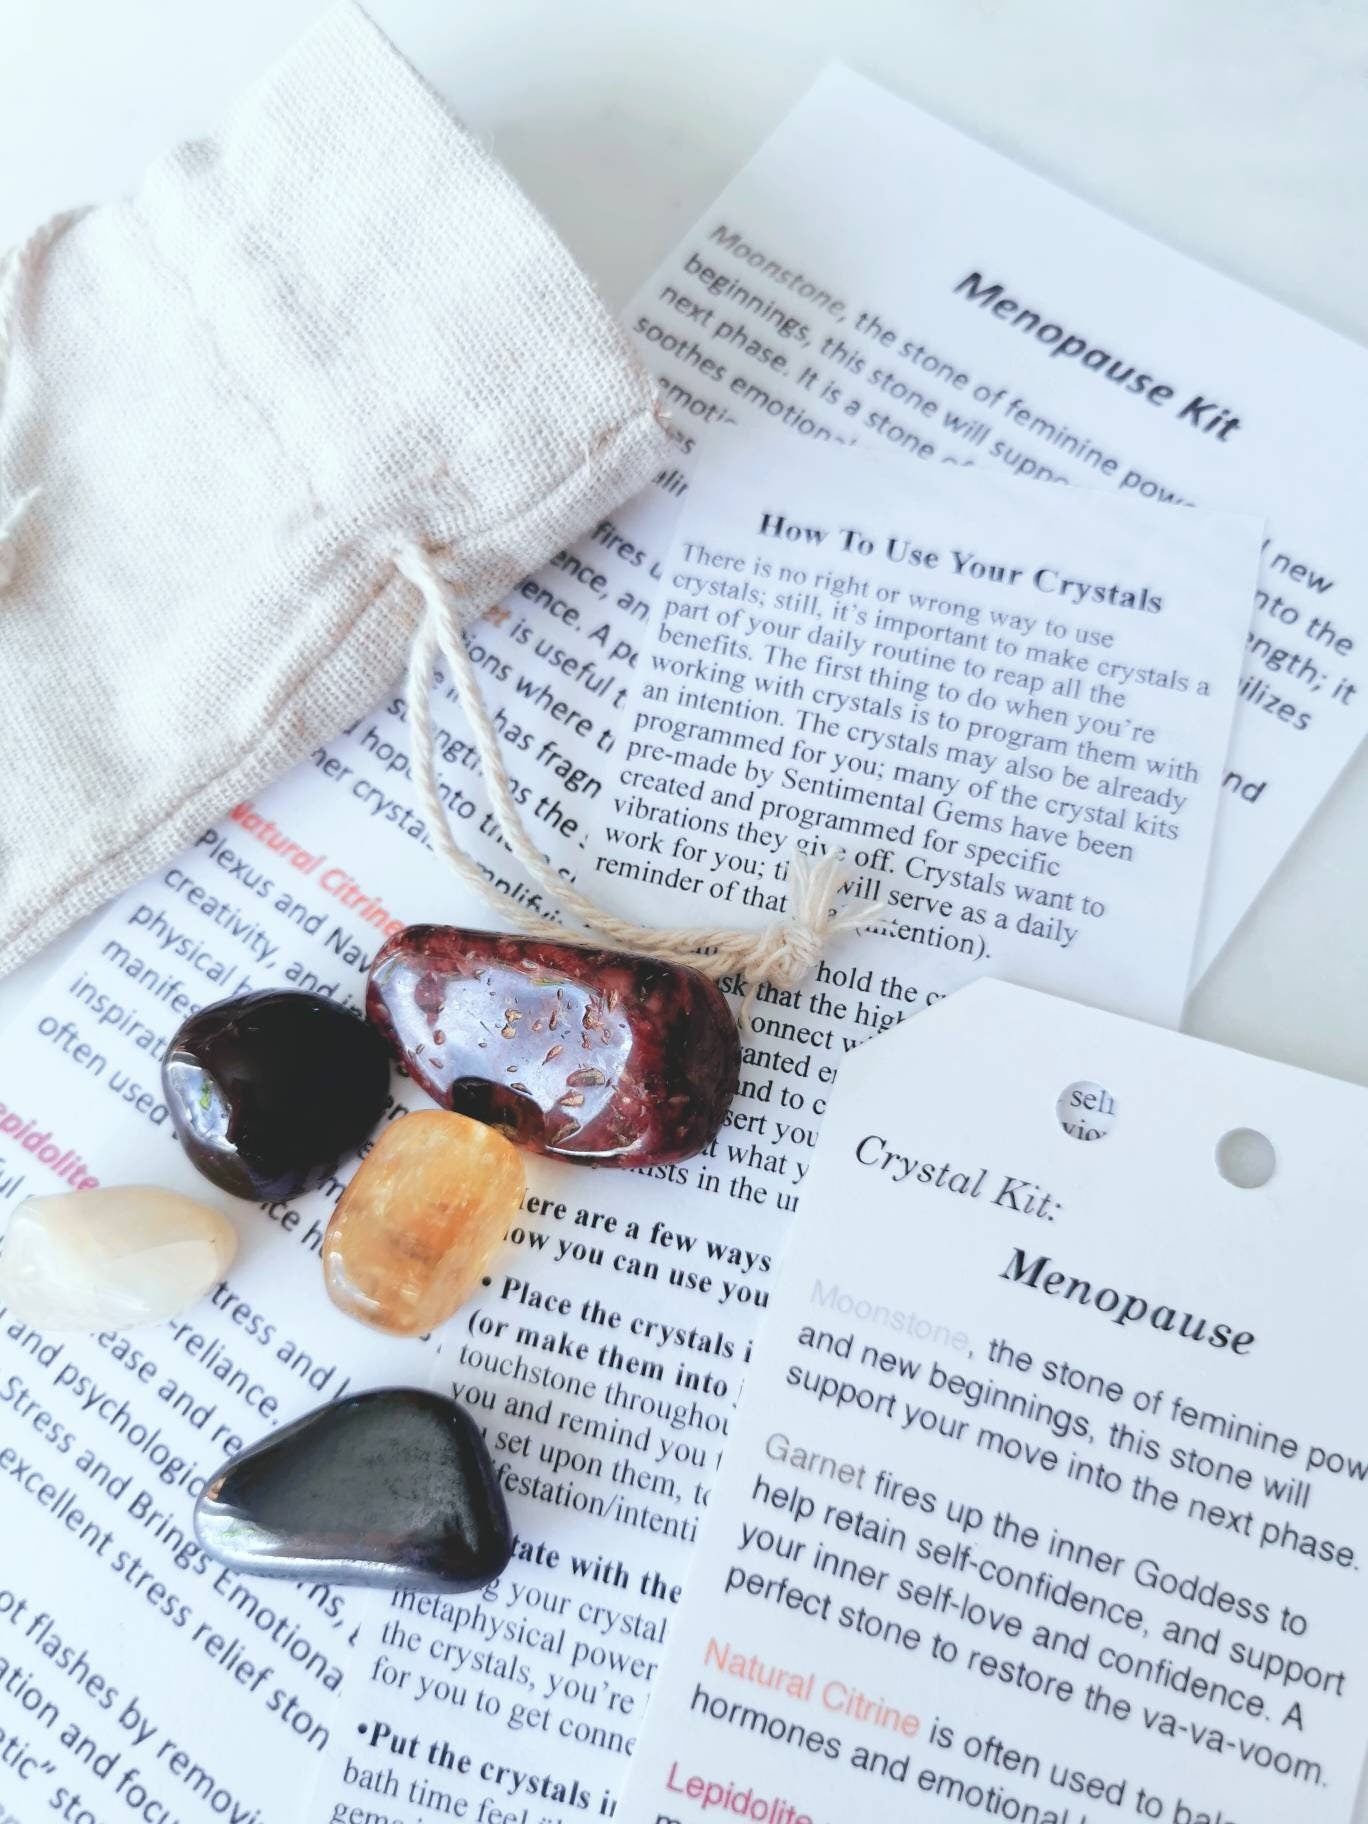 Menopause Crystal Kit - Empowerment Affirmation